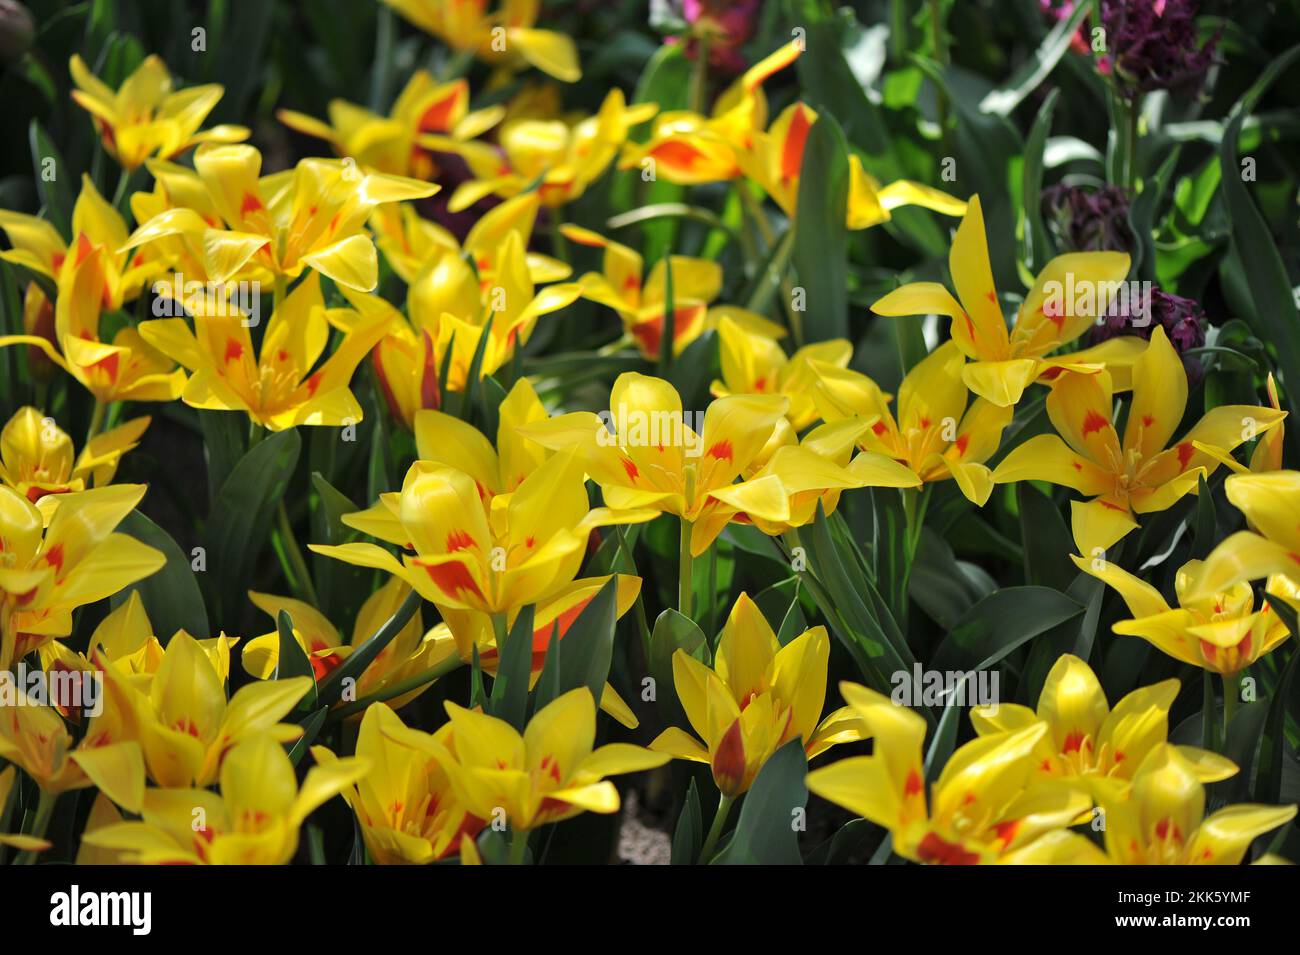 Yellow and red Miscellaneous Tschimgan mountain tulips (Tulipa tschimganica) bloom in a garden in March Stock Photo